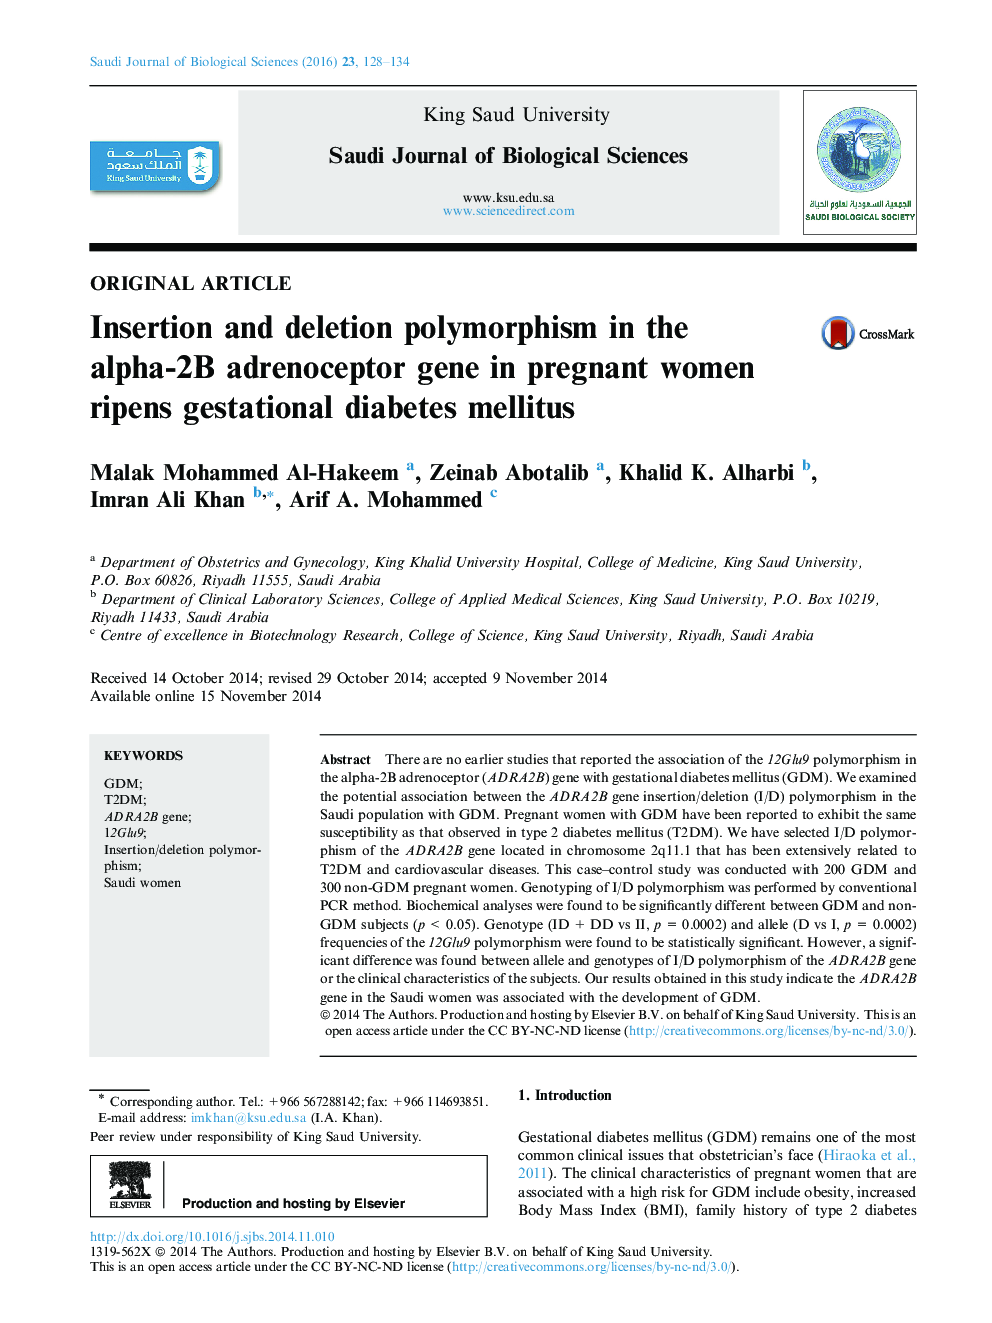 Insertion and deletion polymorphism in the alpha-2B adrenoceptor gene in pregnant women ripens gestational diabetes mellitus 